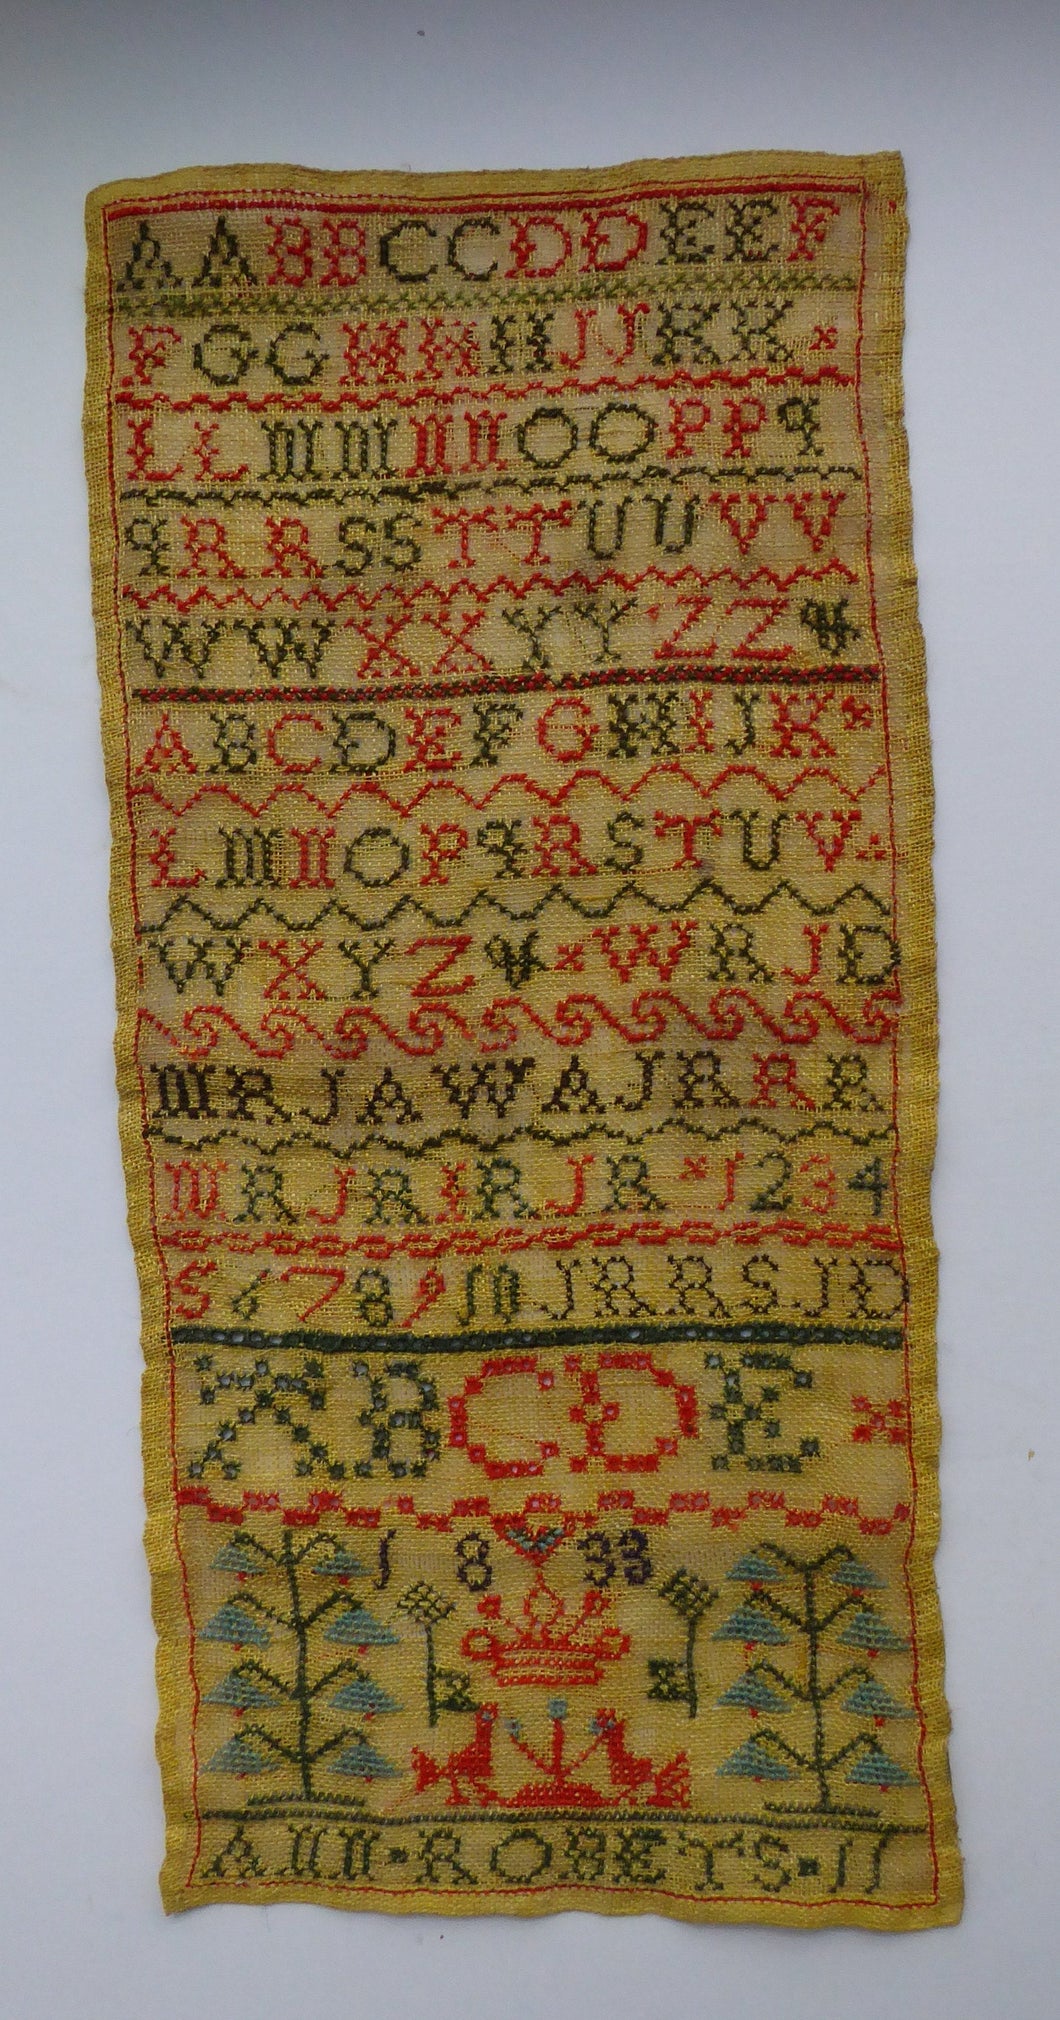 1833 ANTIQUE Embroidered Sampler. Rarer William IV GEORGIAN Scottish Textile by Ann Roberts